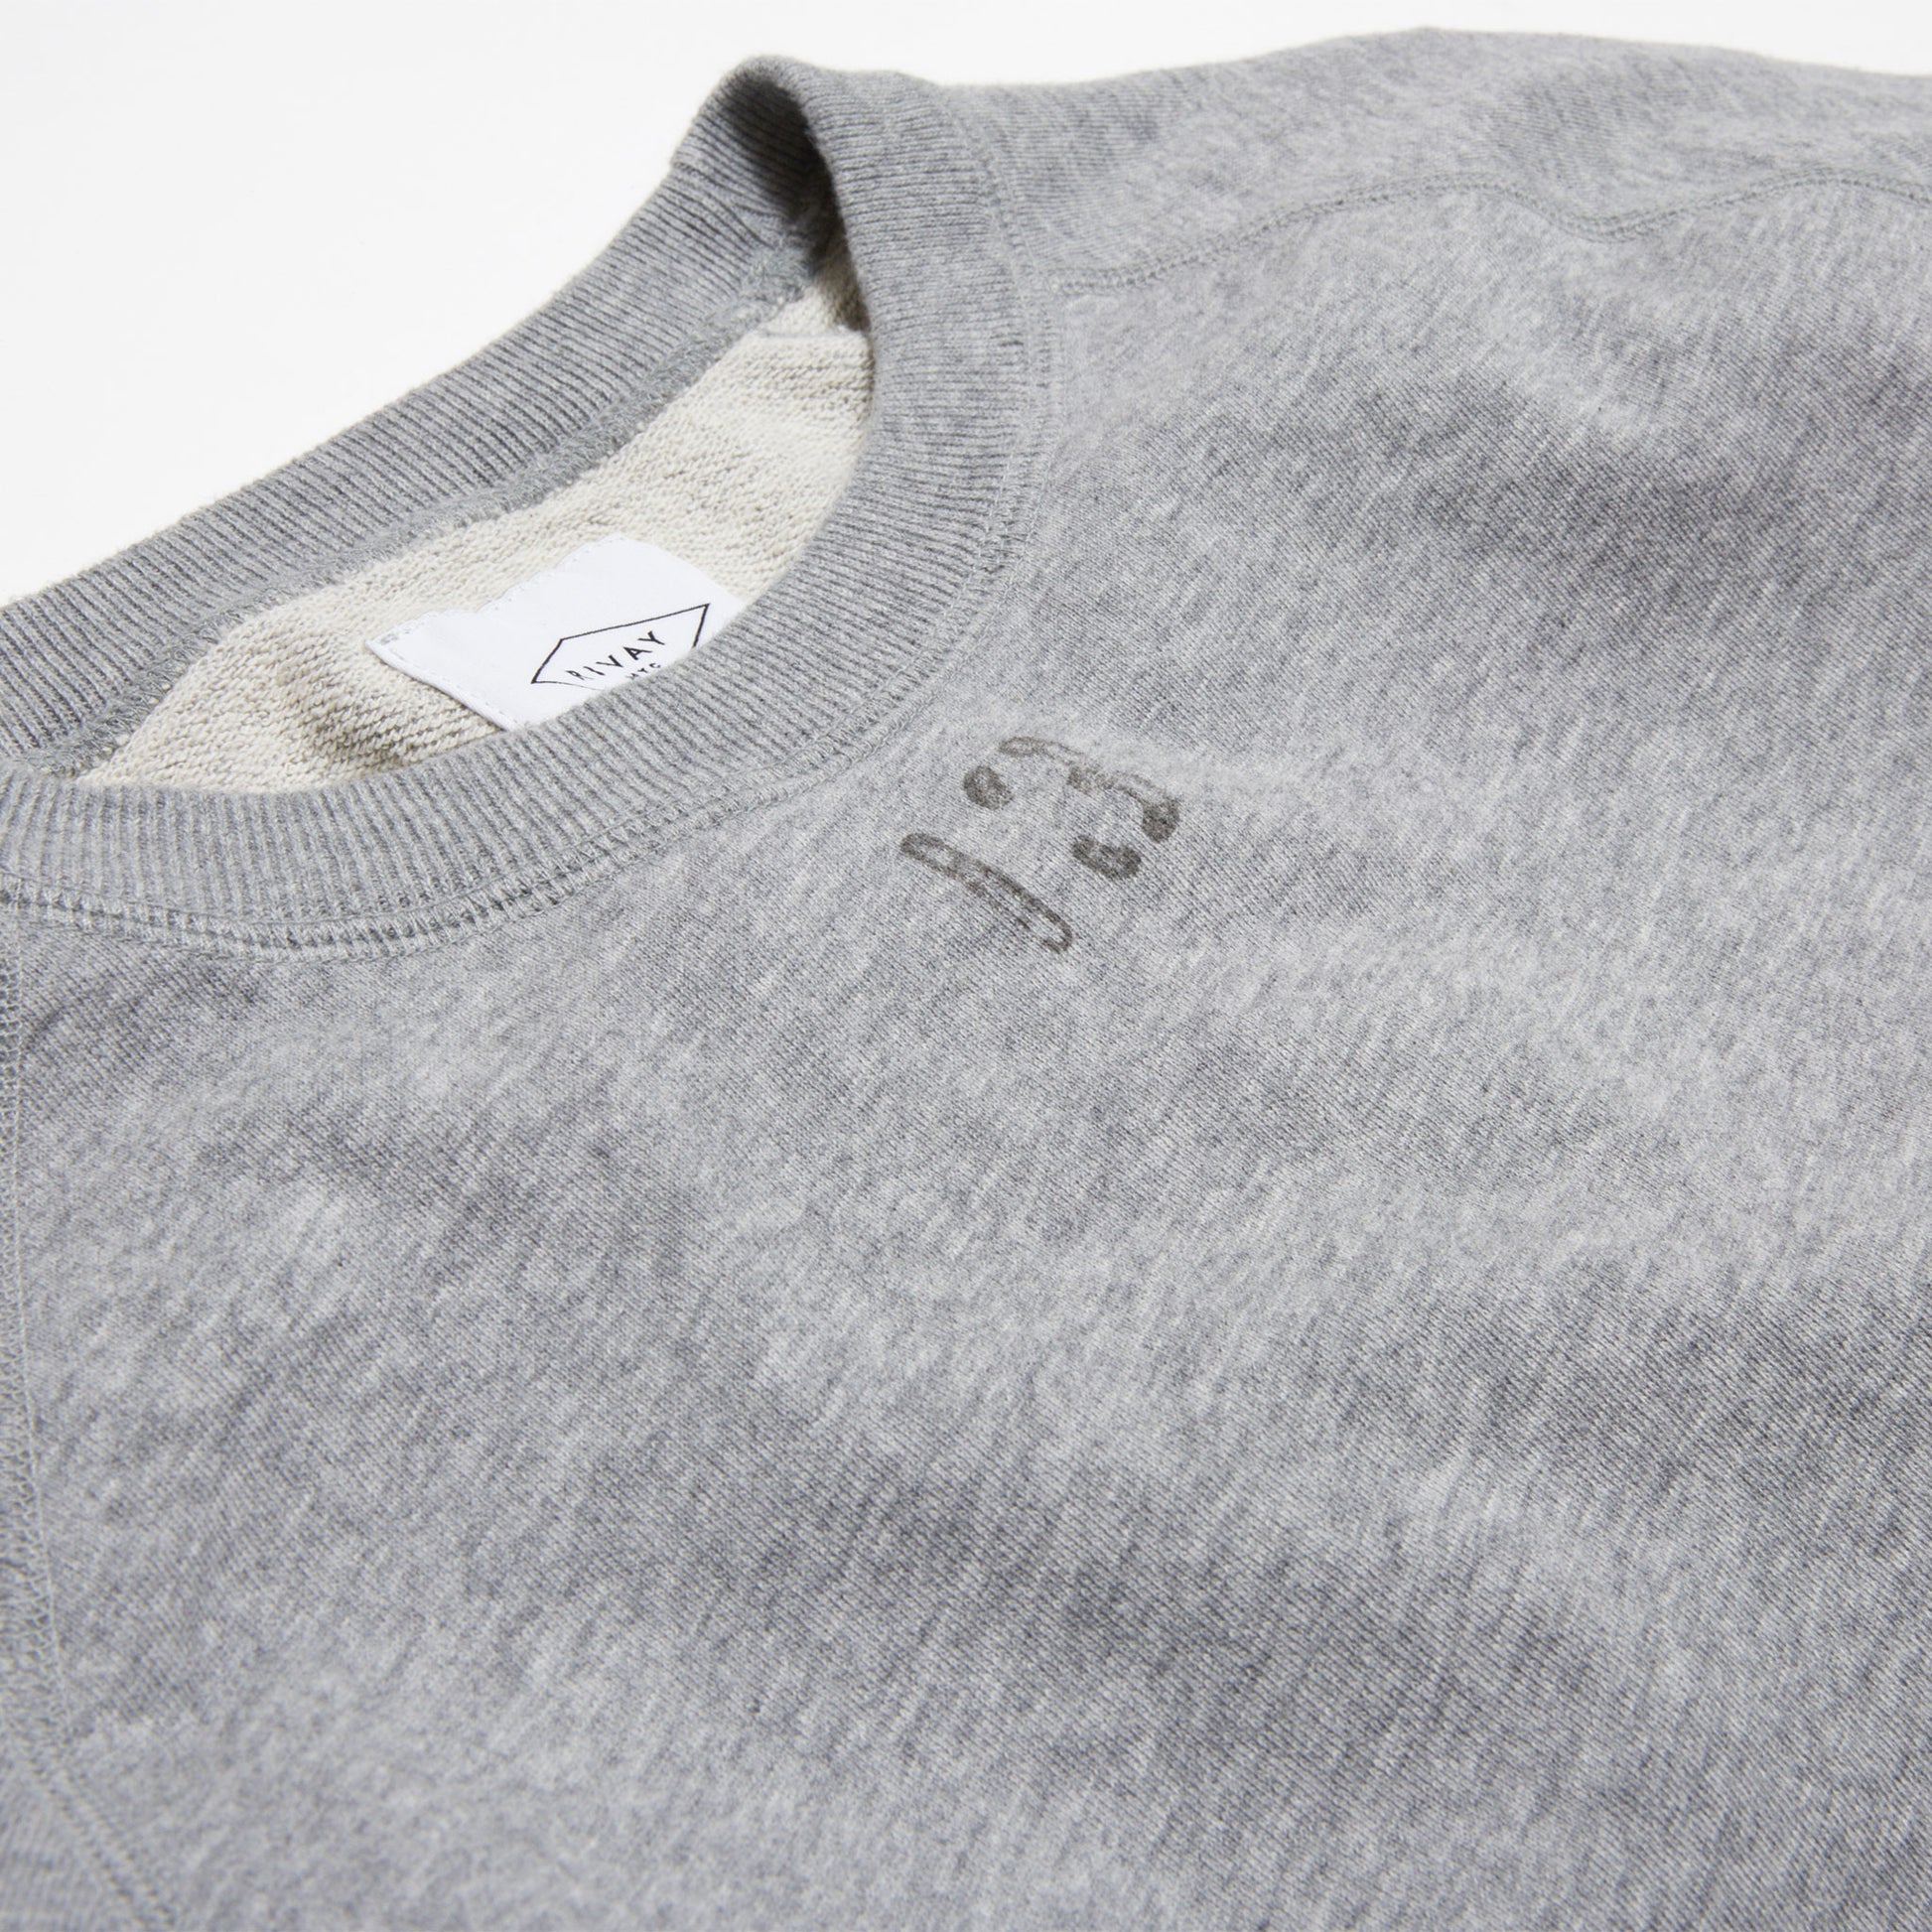 frank & oak - the ‘76 french terry sweatshirt in grey